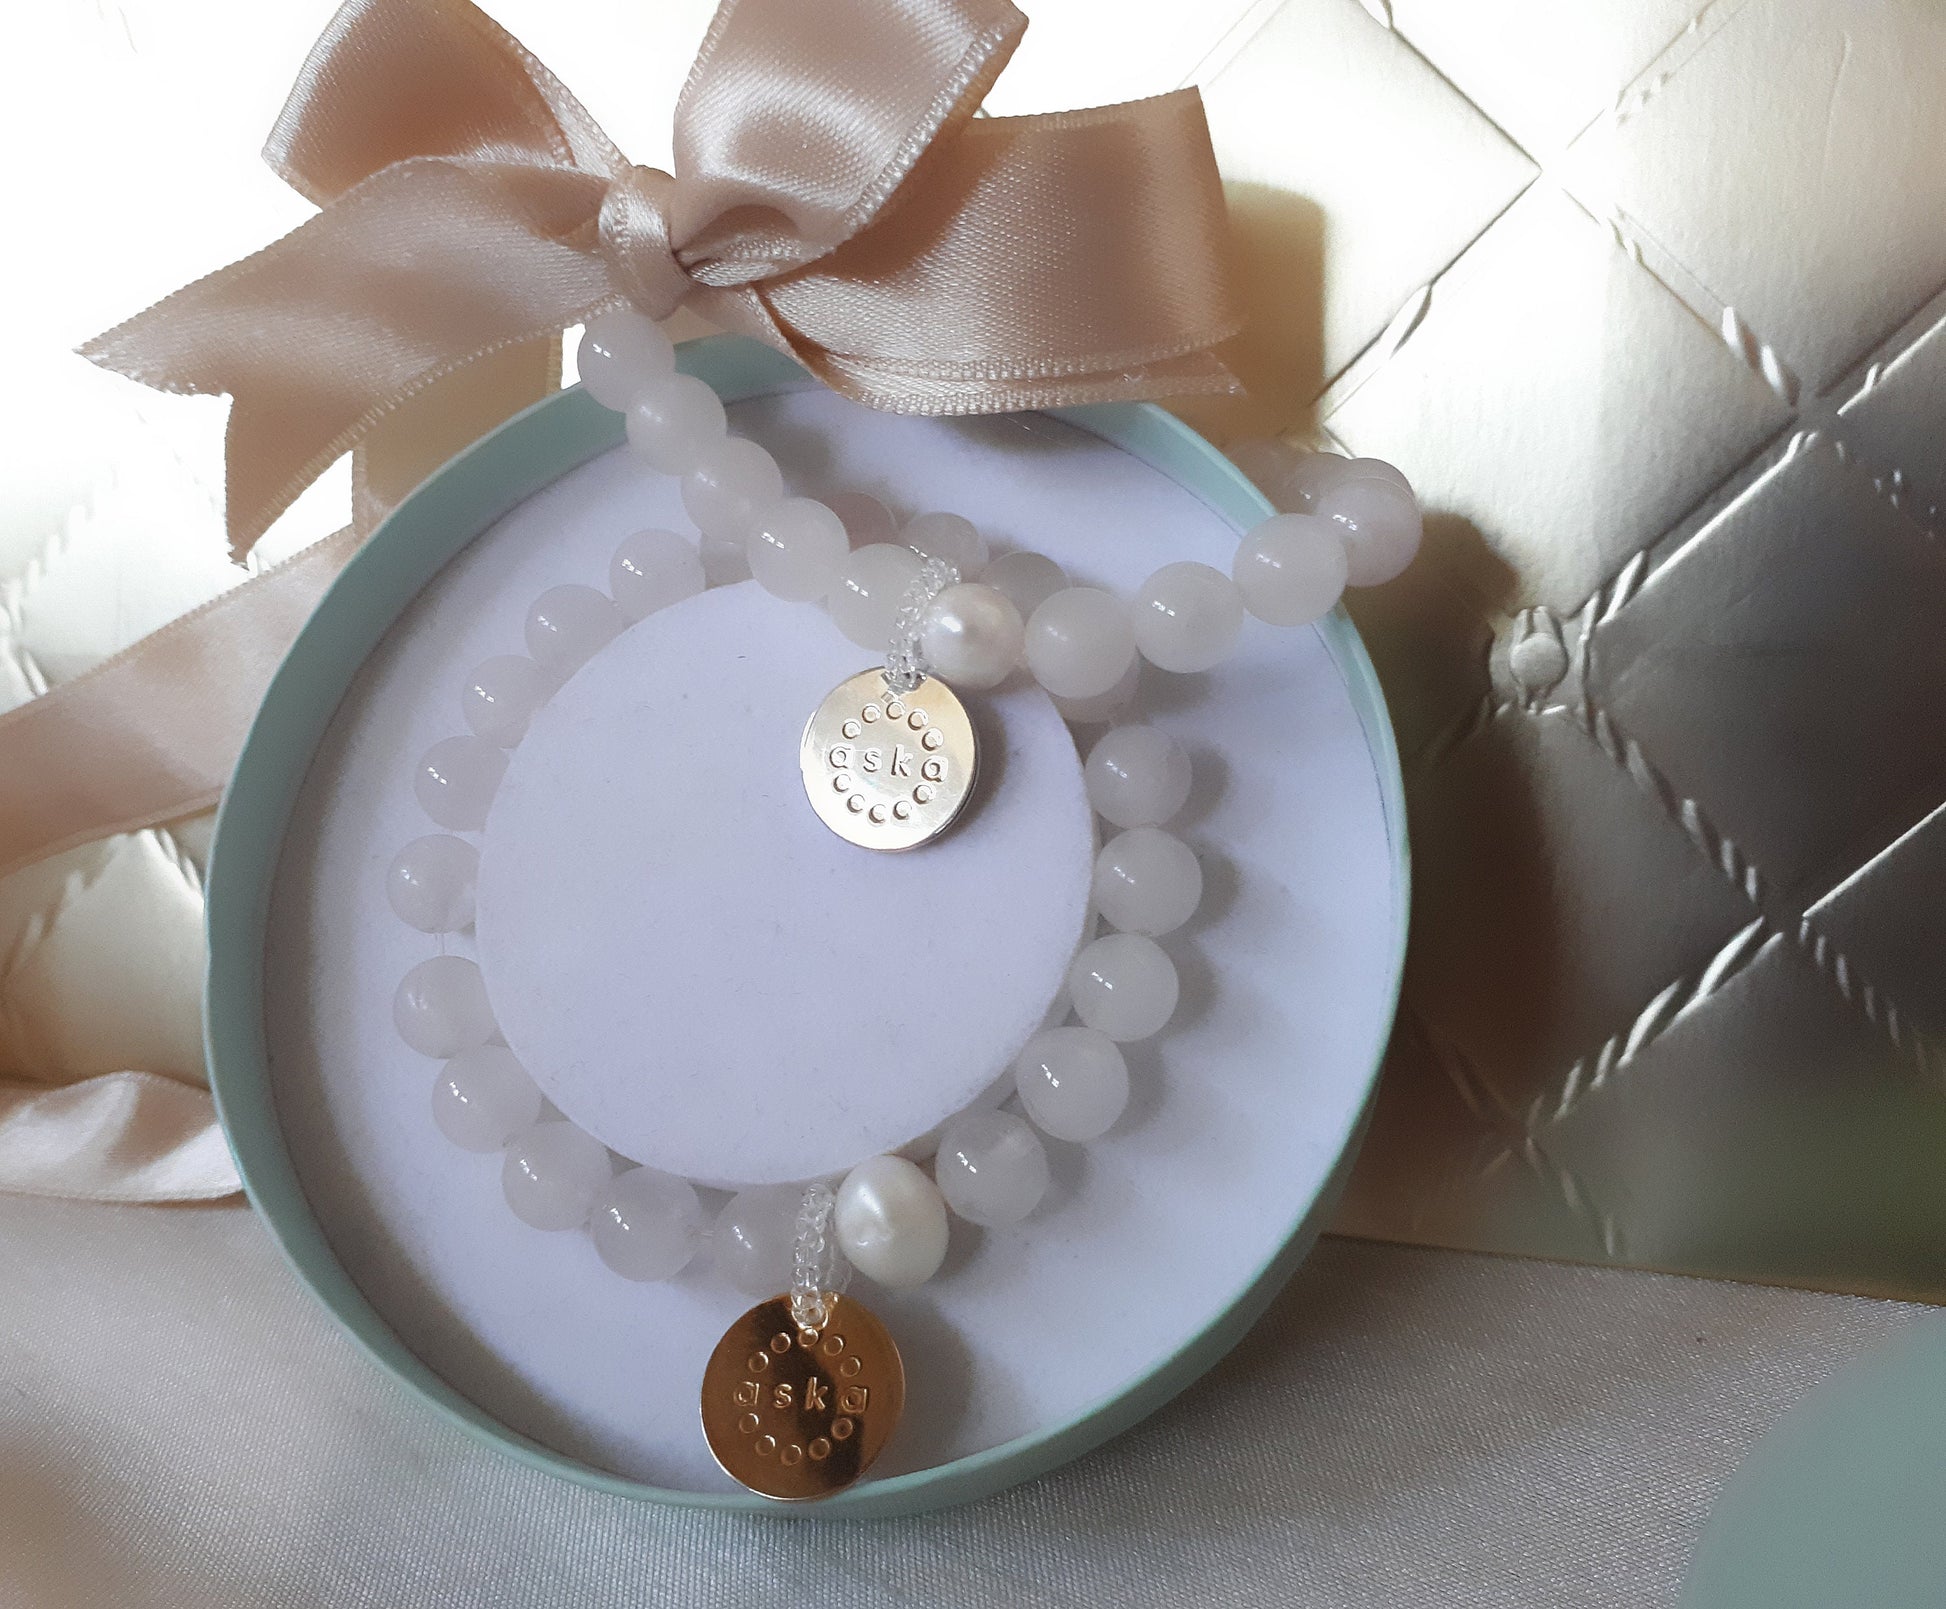 Aska Maternity Movement Bracelet in rose quartz with sterling silver pendant